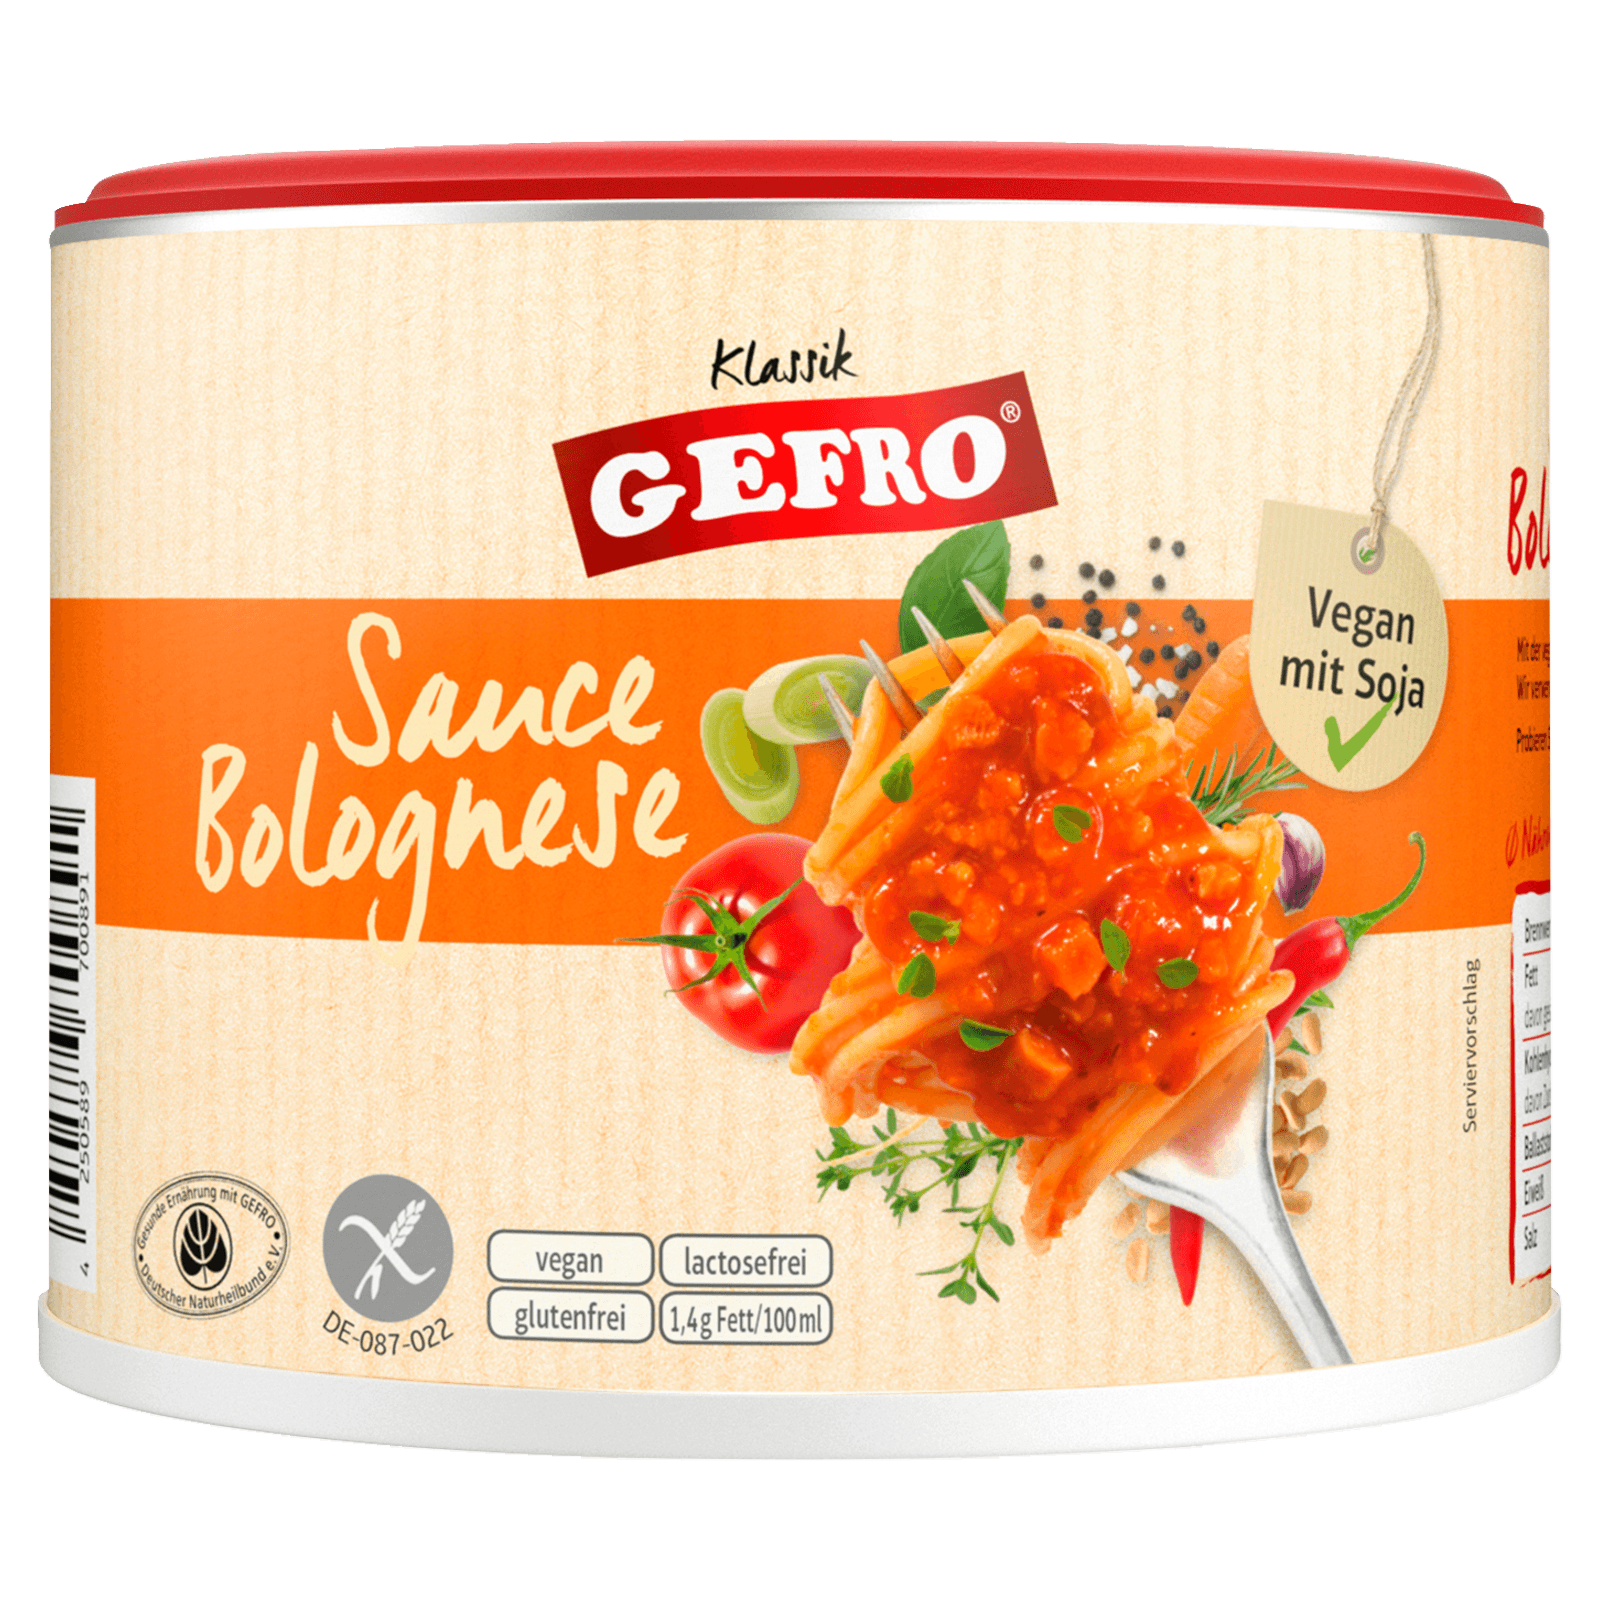 Gefro Sauce Bolognese vegan 240g  für 5.99 EUR